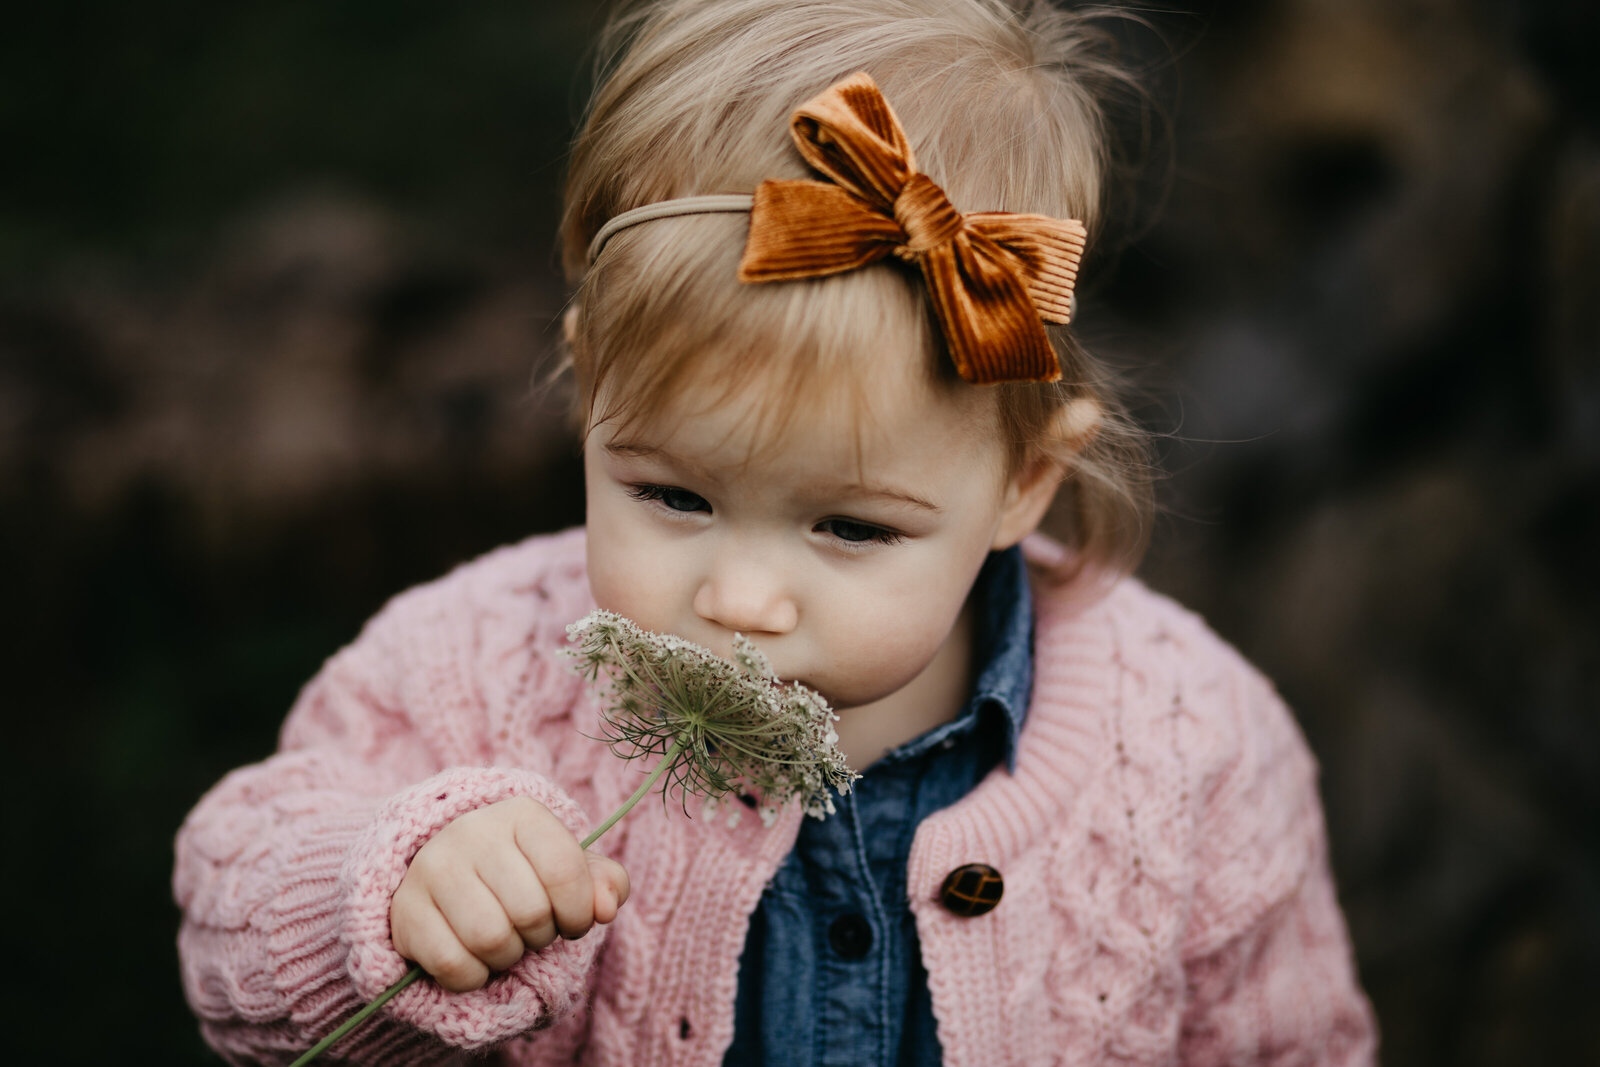 A little girl in an orange bow smells a flower